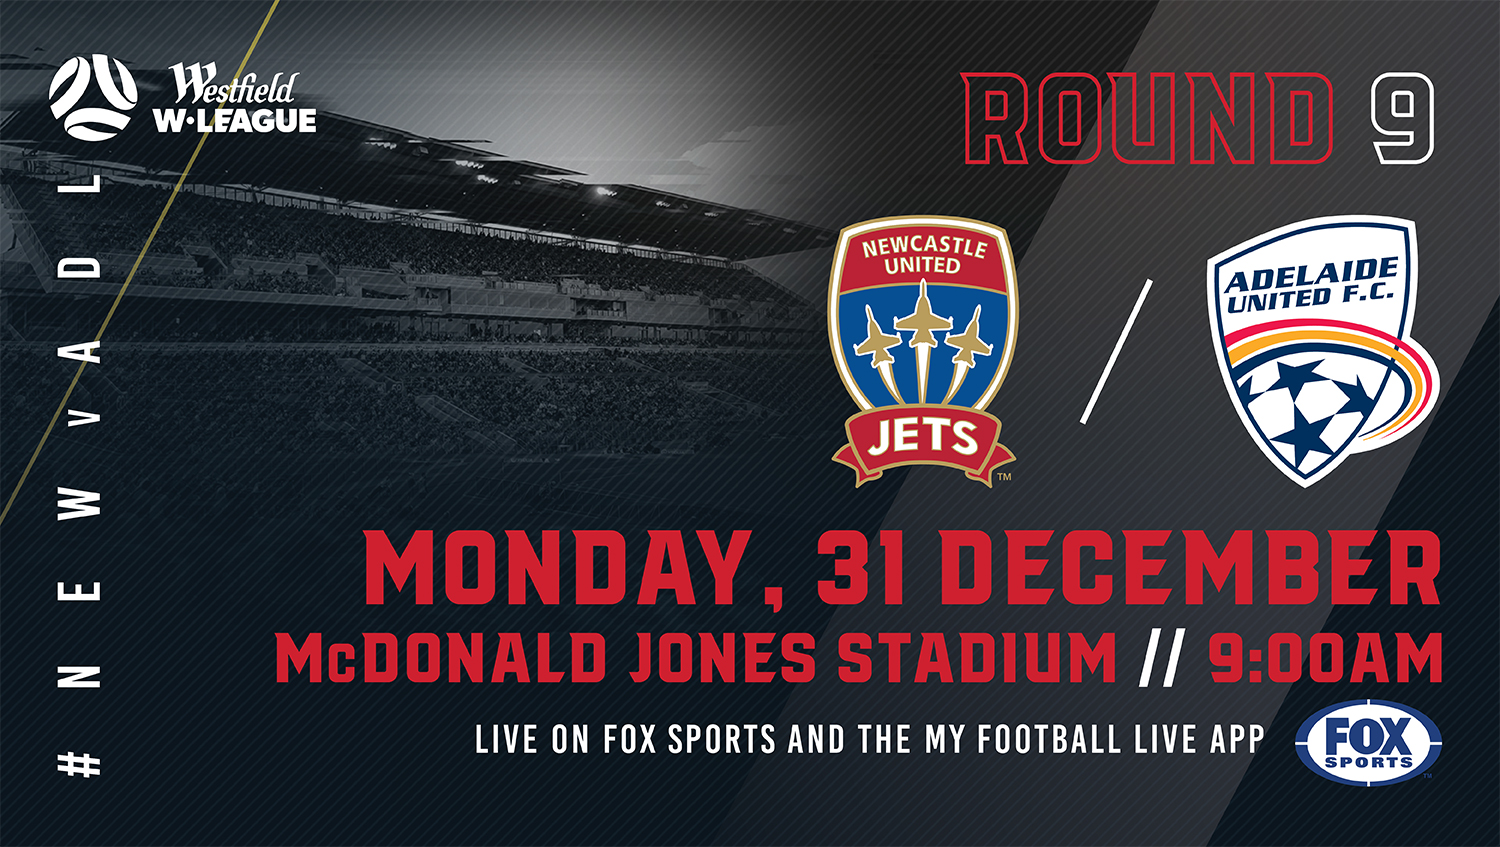 Westfield W-League Newcastle Jets vs Adelaide United match details